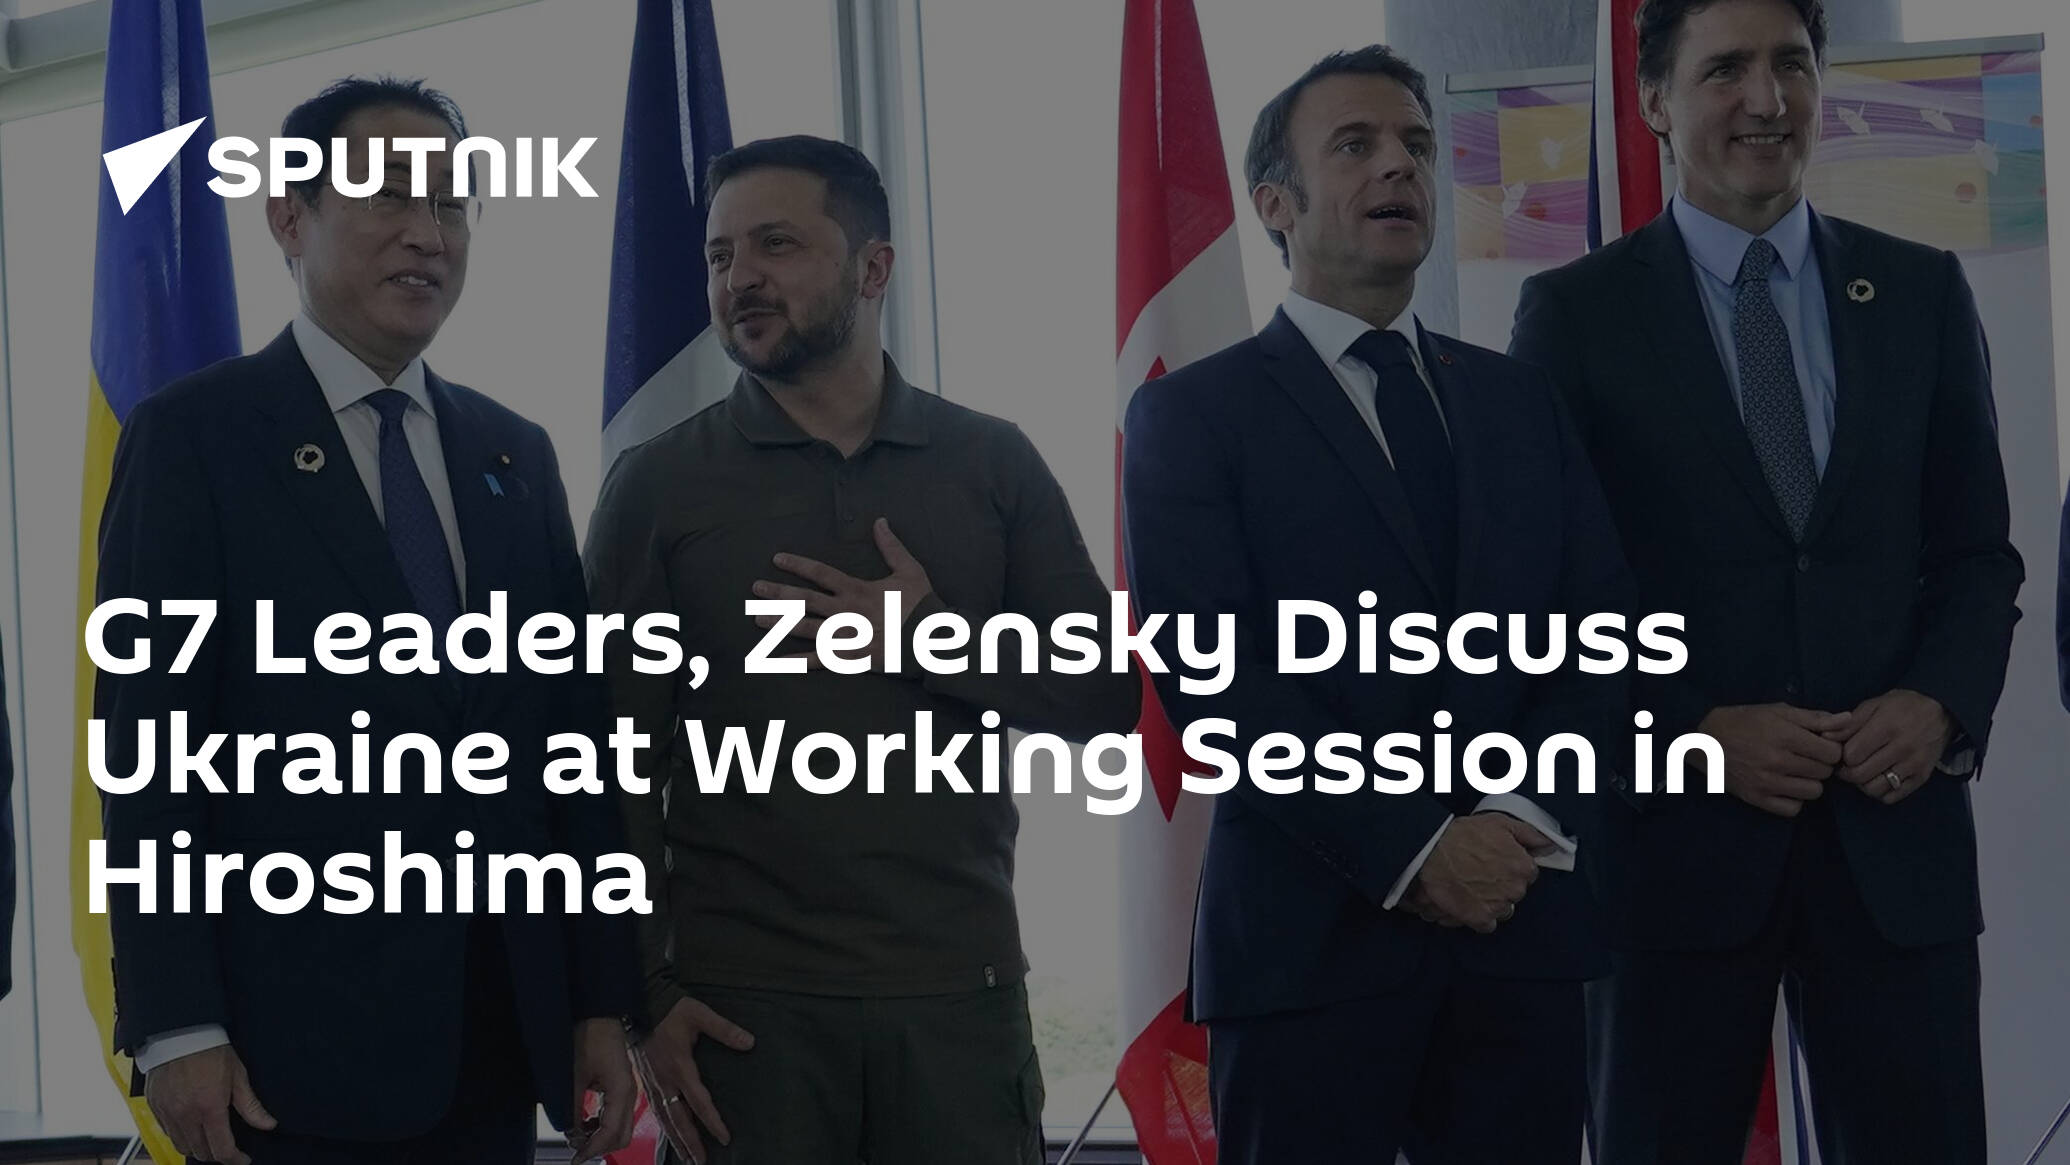 G7 Leaders, Zelensky Discuss Ukraine at Working Session in Hiroshima